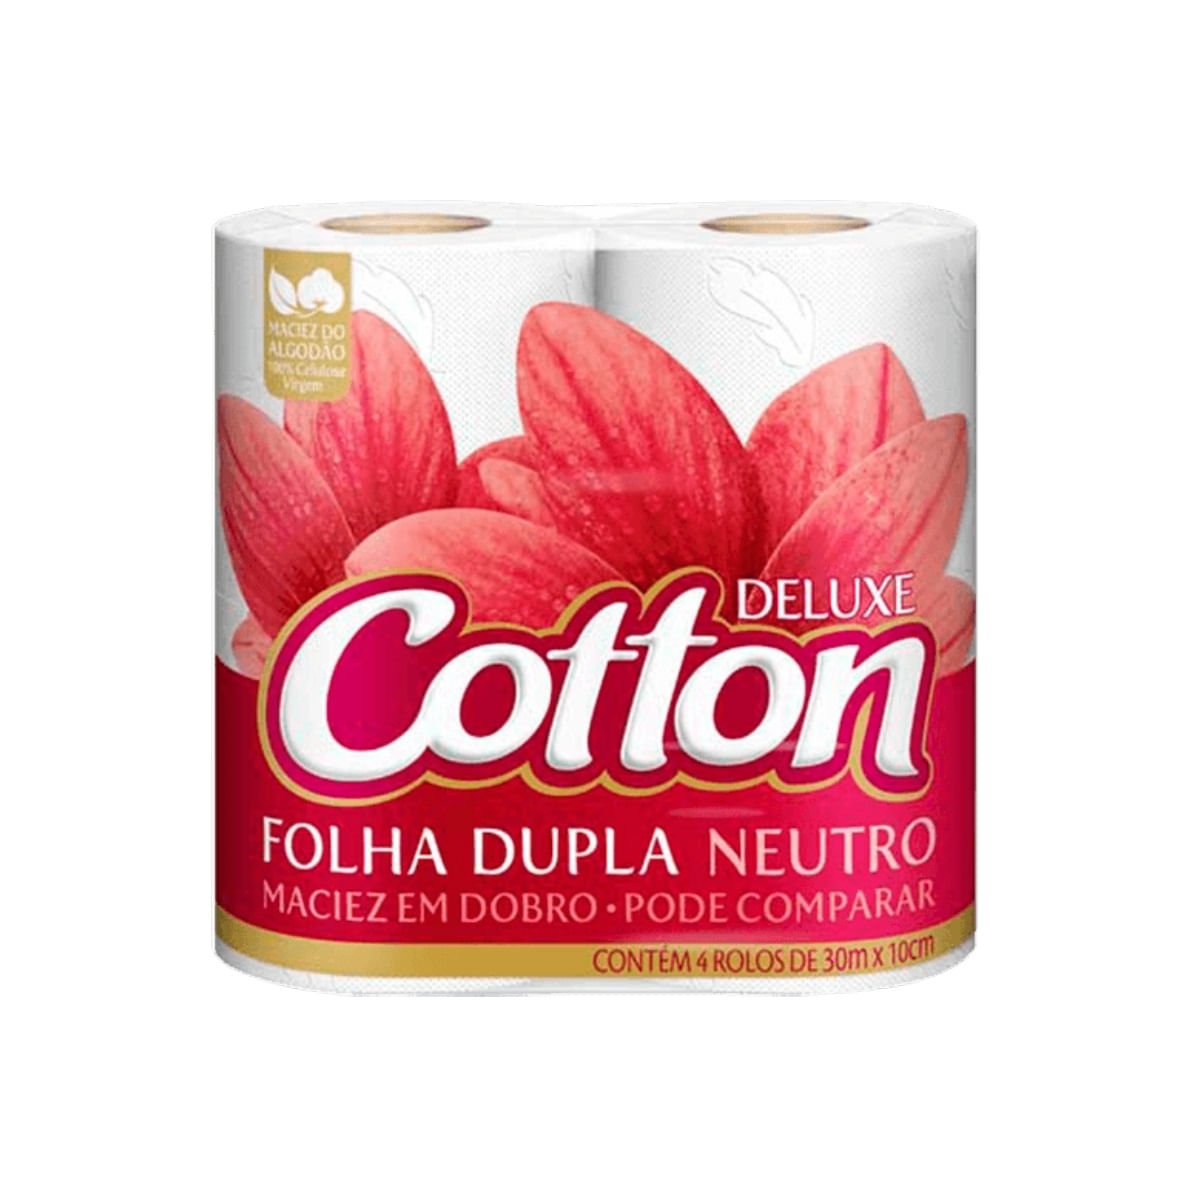 Papel Higienico Cotton Luxe Folha Dupla 30M Neutro C/4